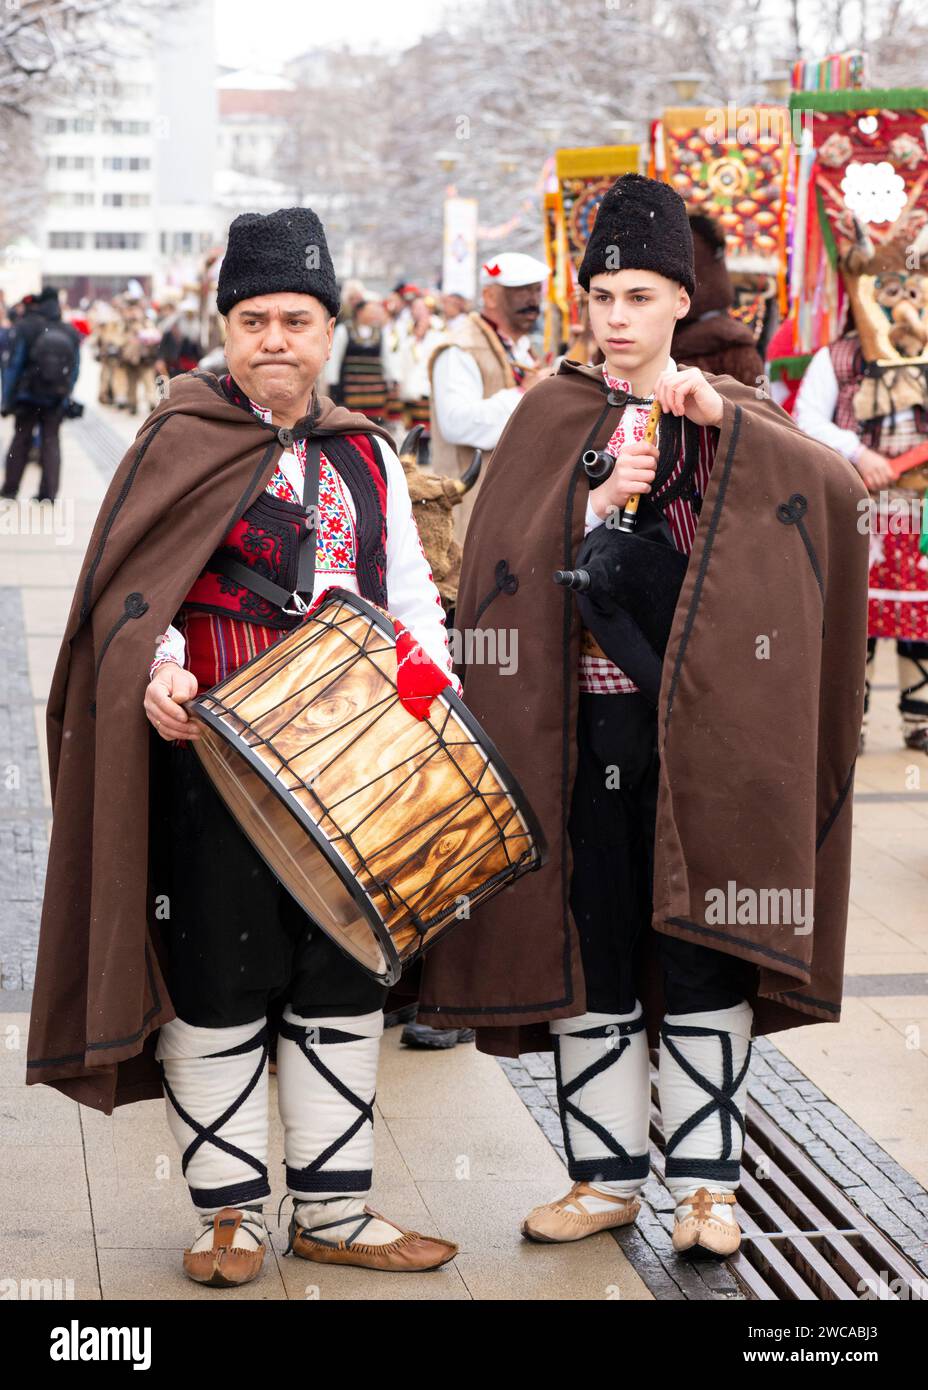 Volksmusiker in traditionellem Outfit beim Surva International Maskerade and Mummers Festival in Pernik, Region Sofia, Bulgarien, Osteuropa, EU Stockfoto